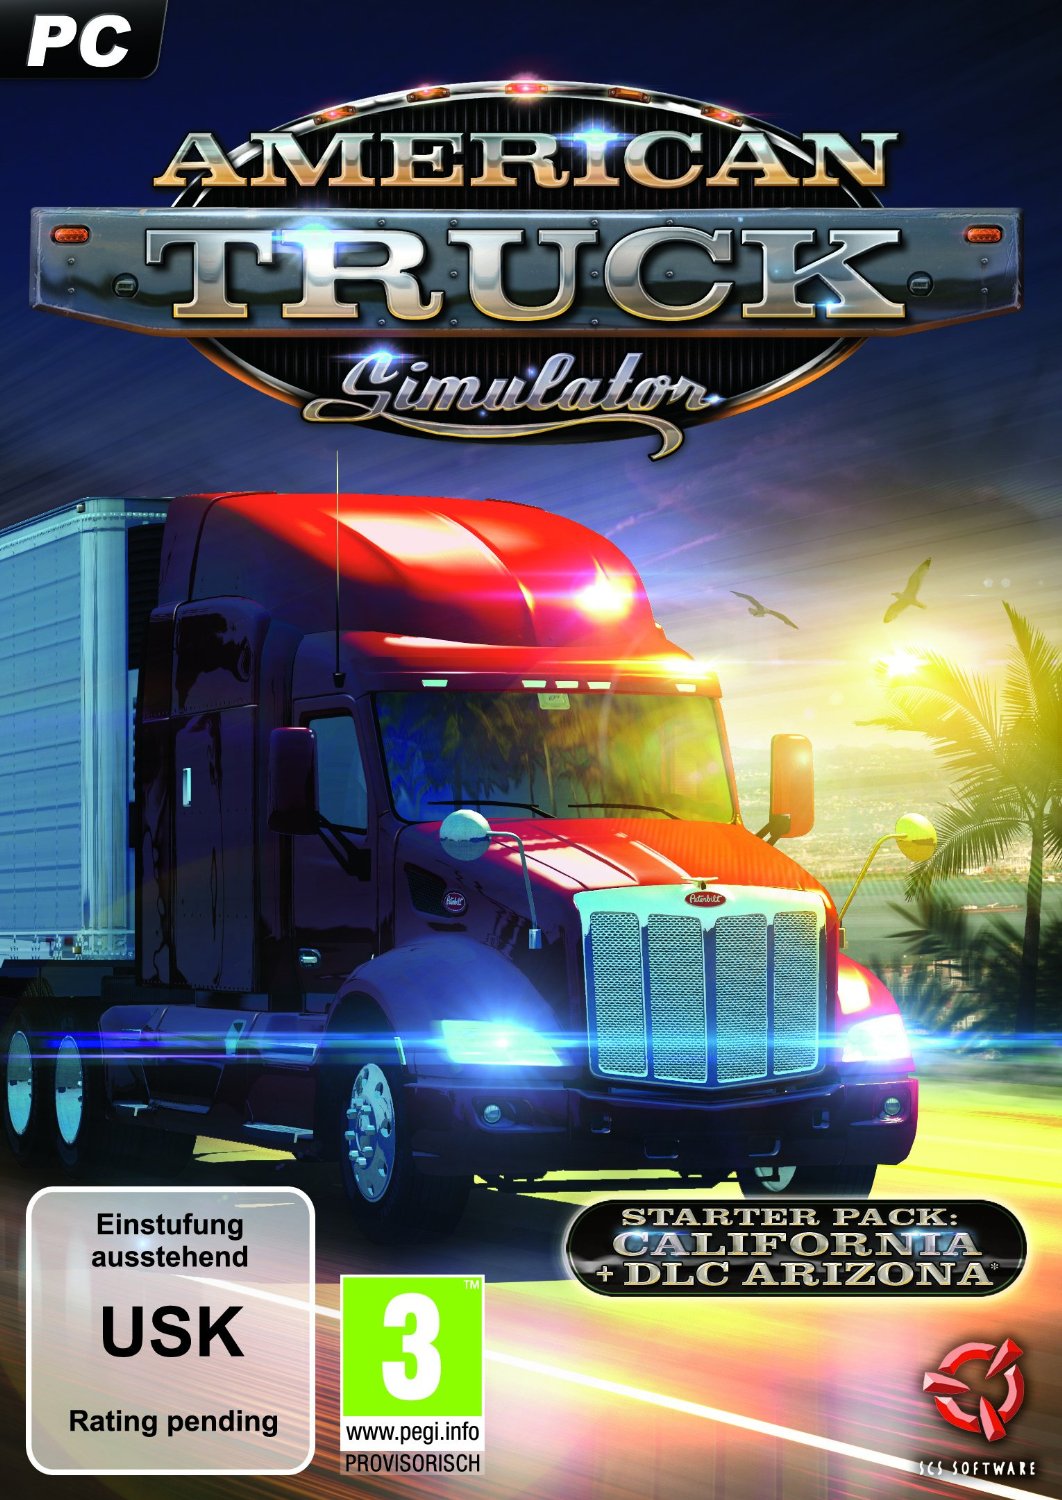 american-truck-simulator-american-truck-simulator-activation-key-code-recordsrewa